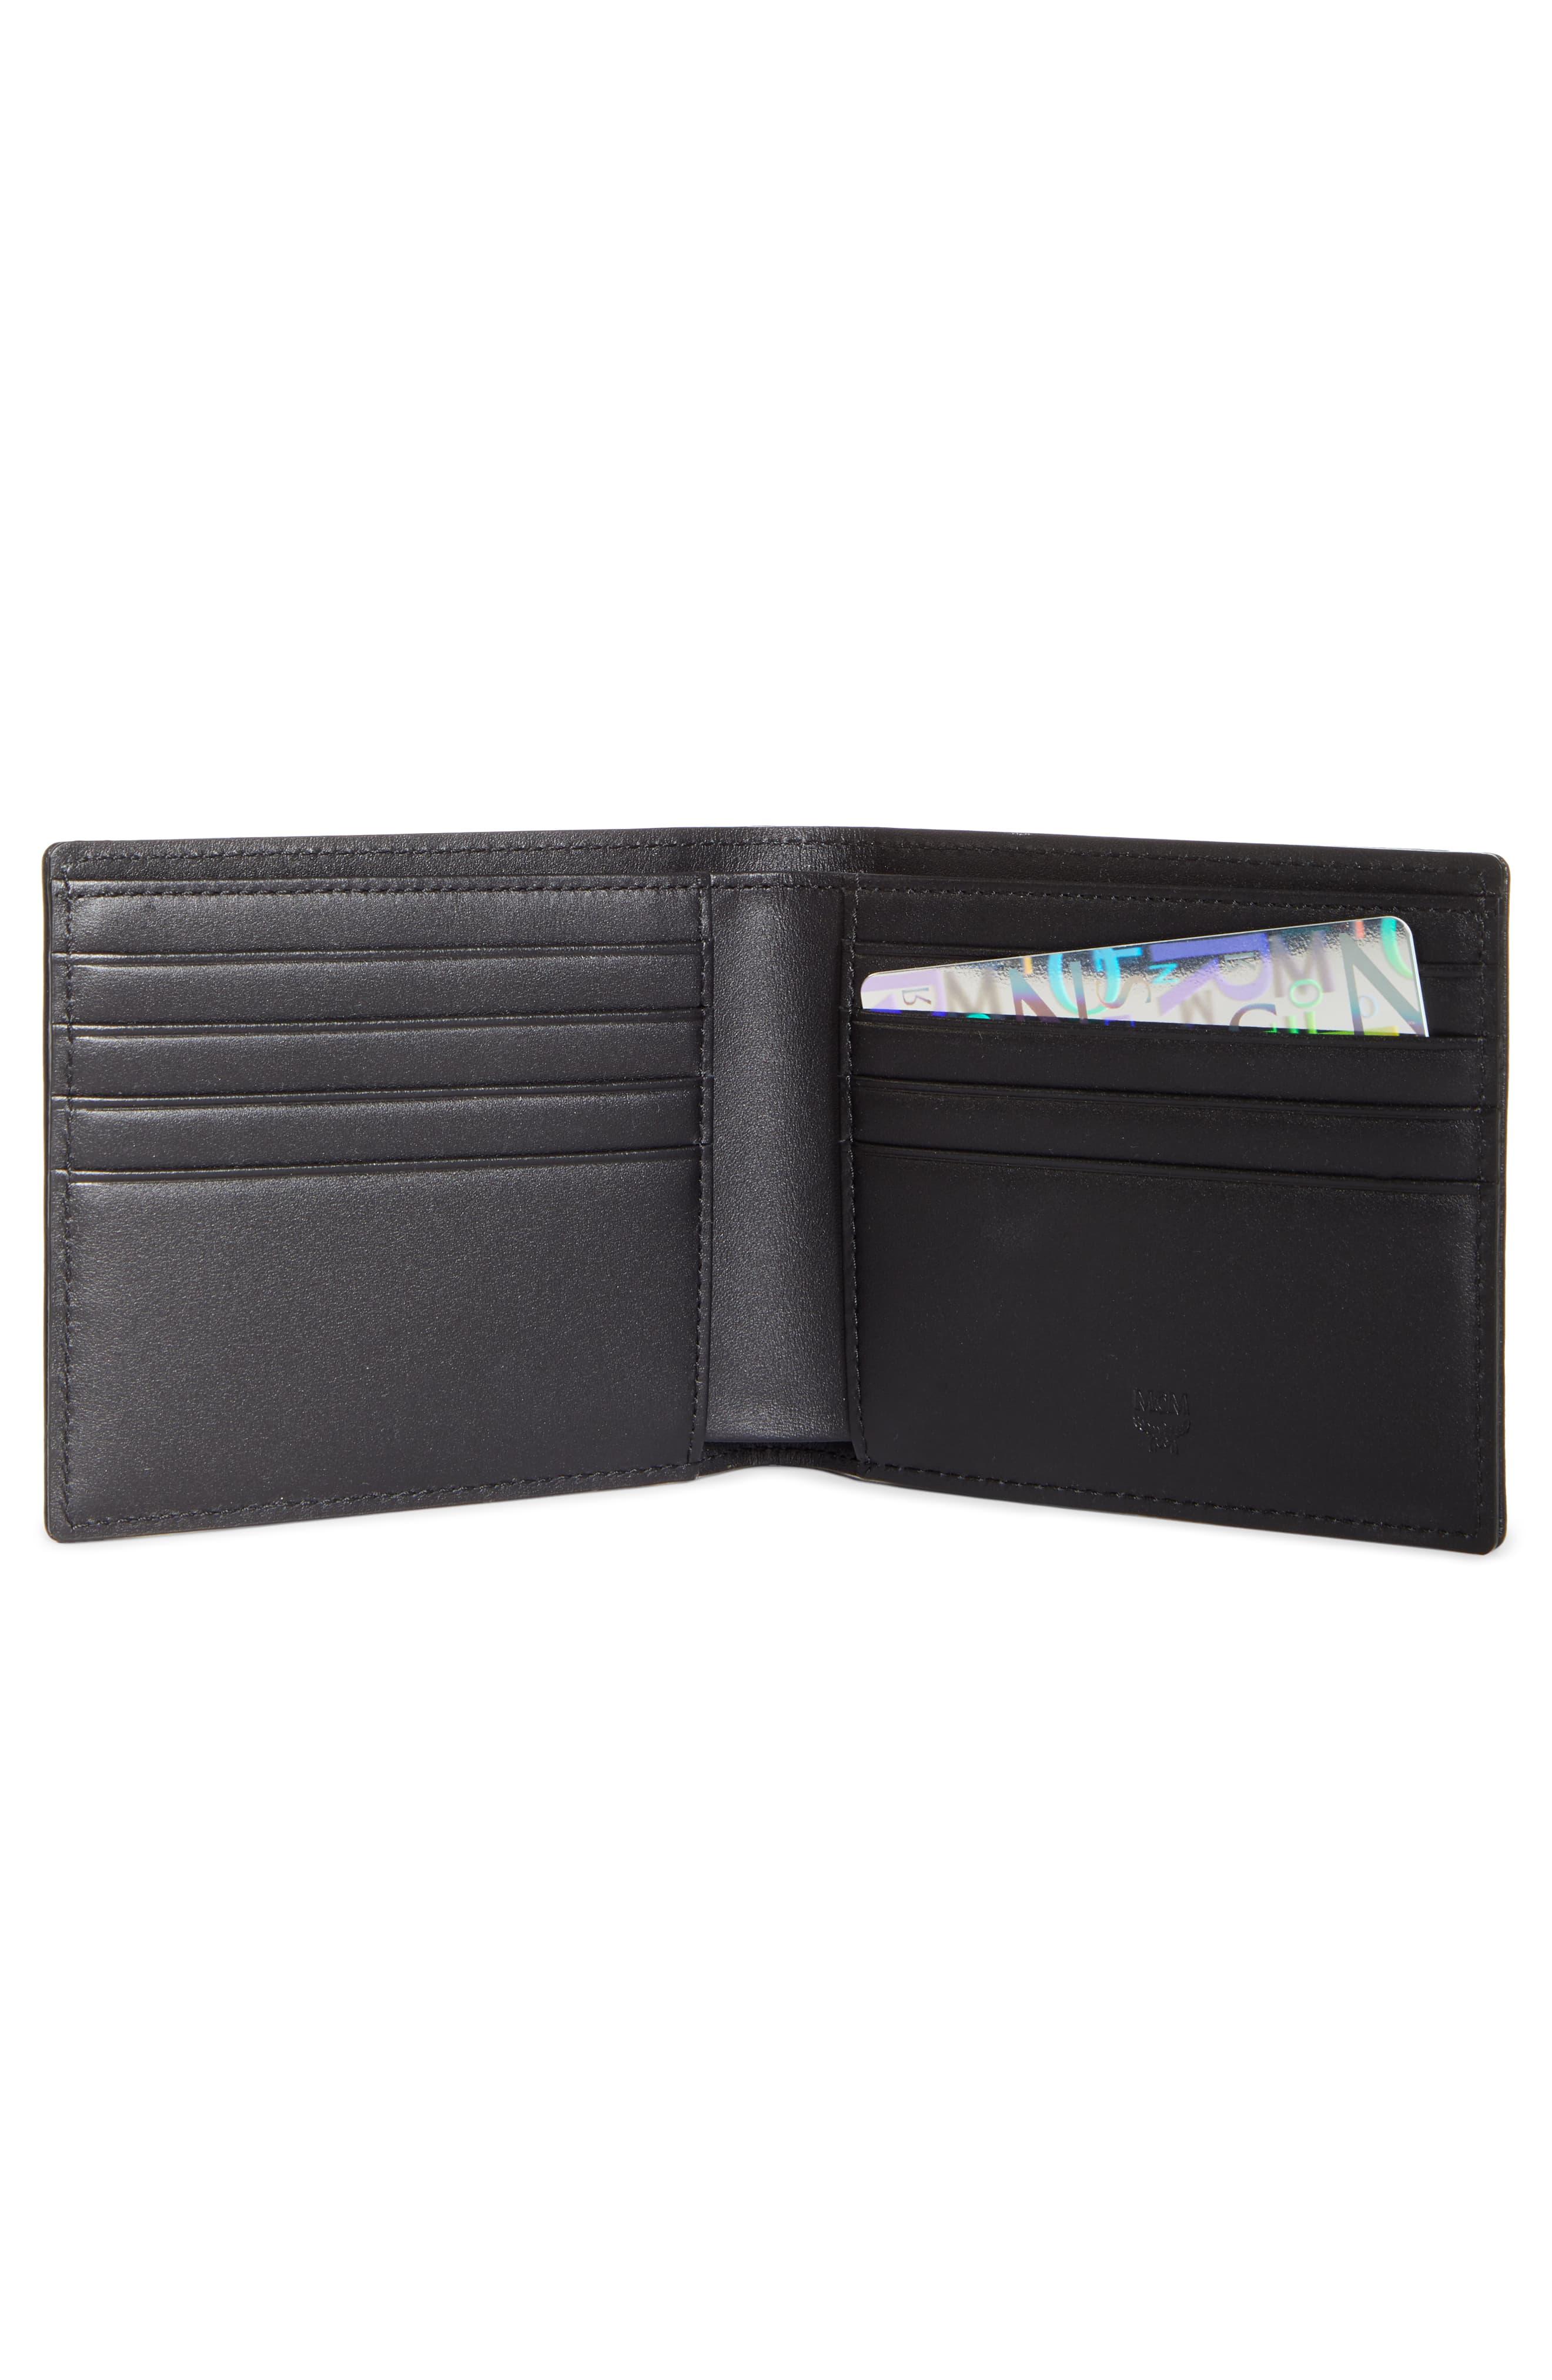 MCM Visetos Wallet in Black for Men - Lyst